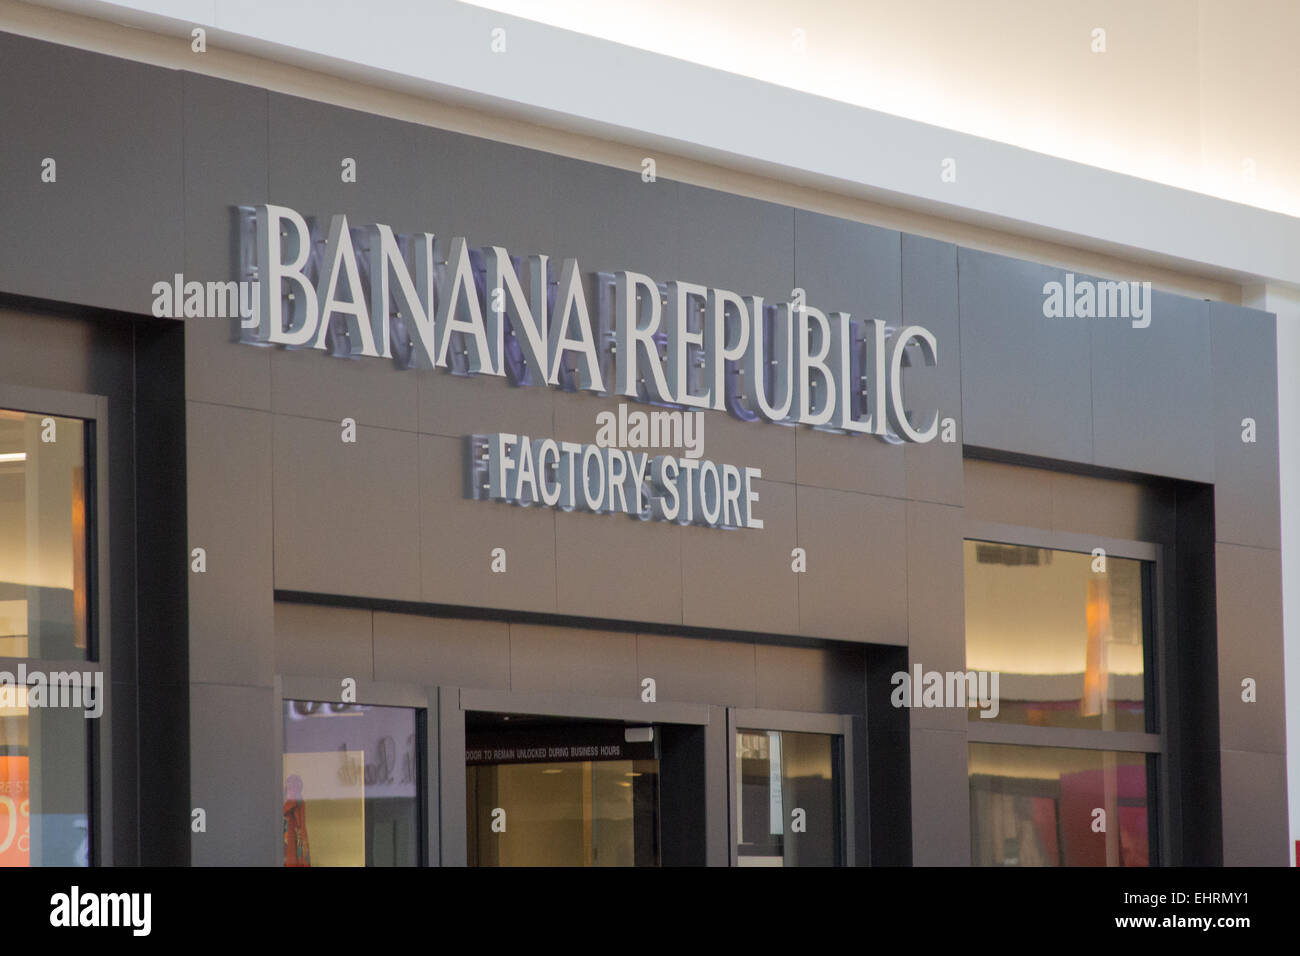 Banana Republic Store Stock Photos & Banana Republic Store Stock ...